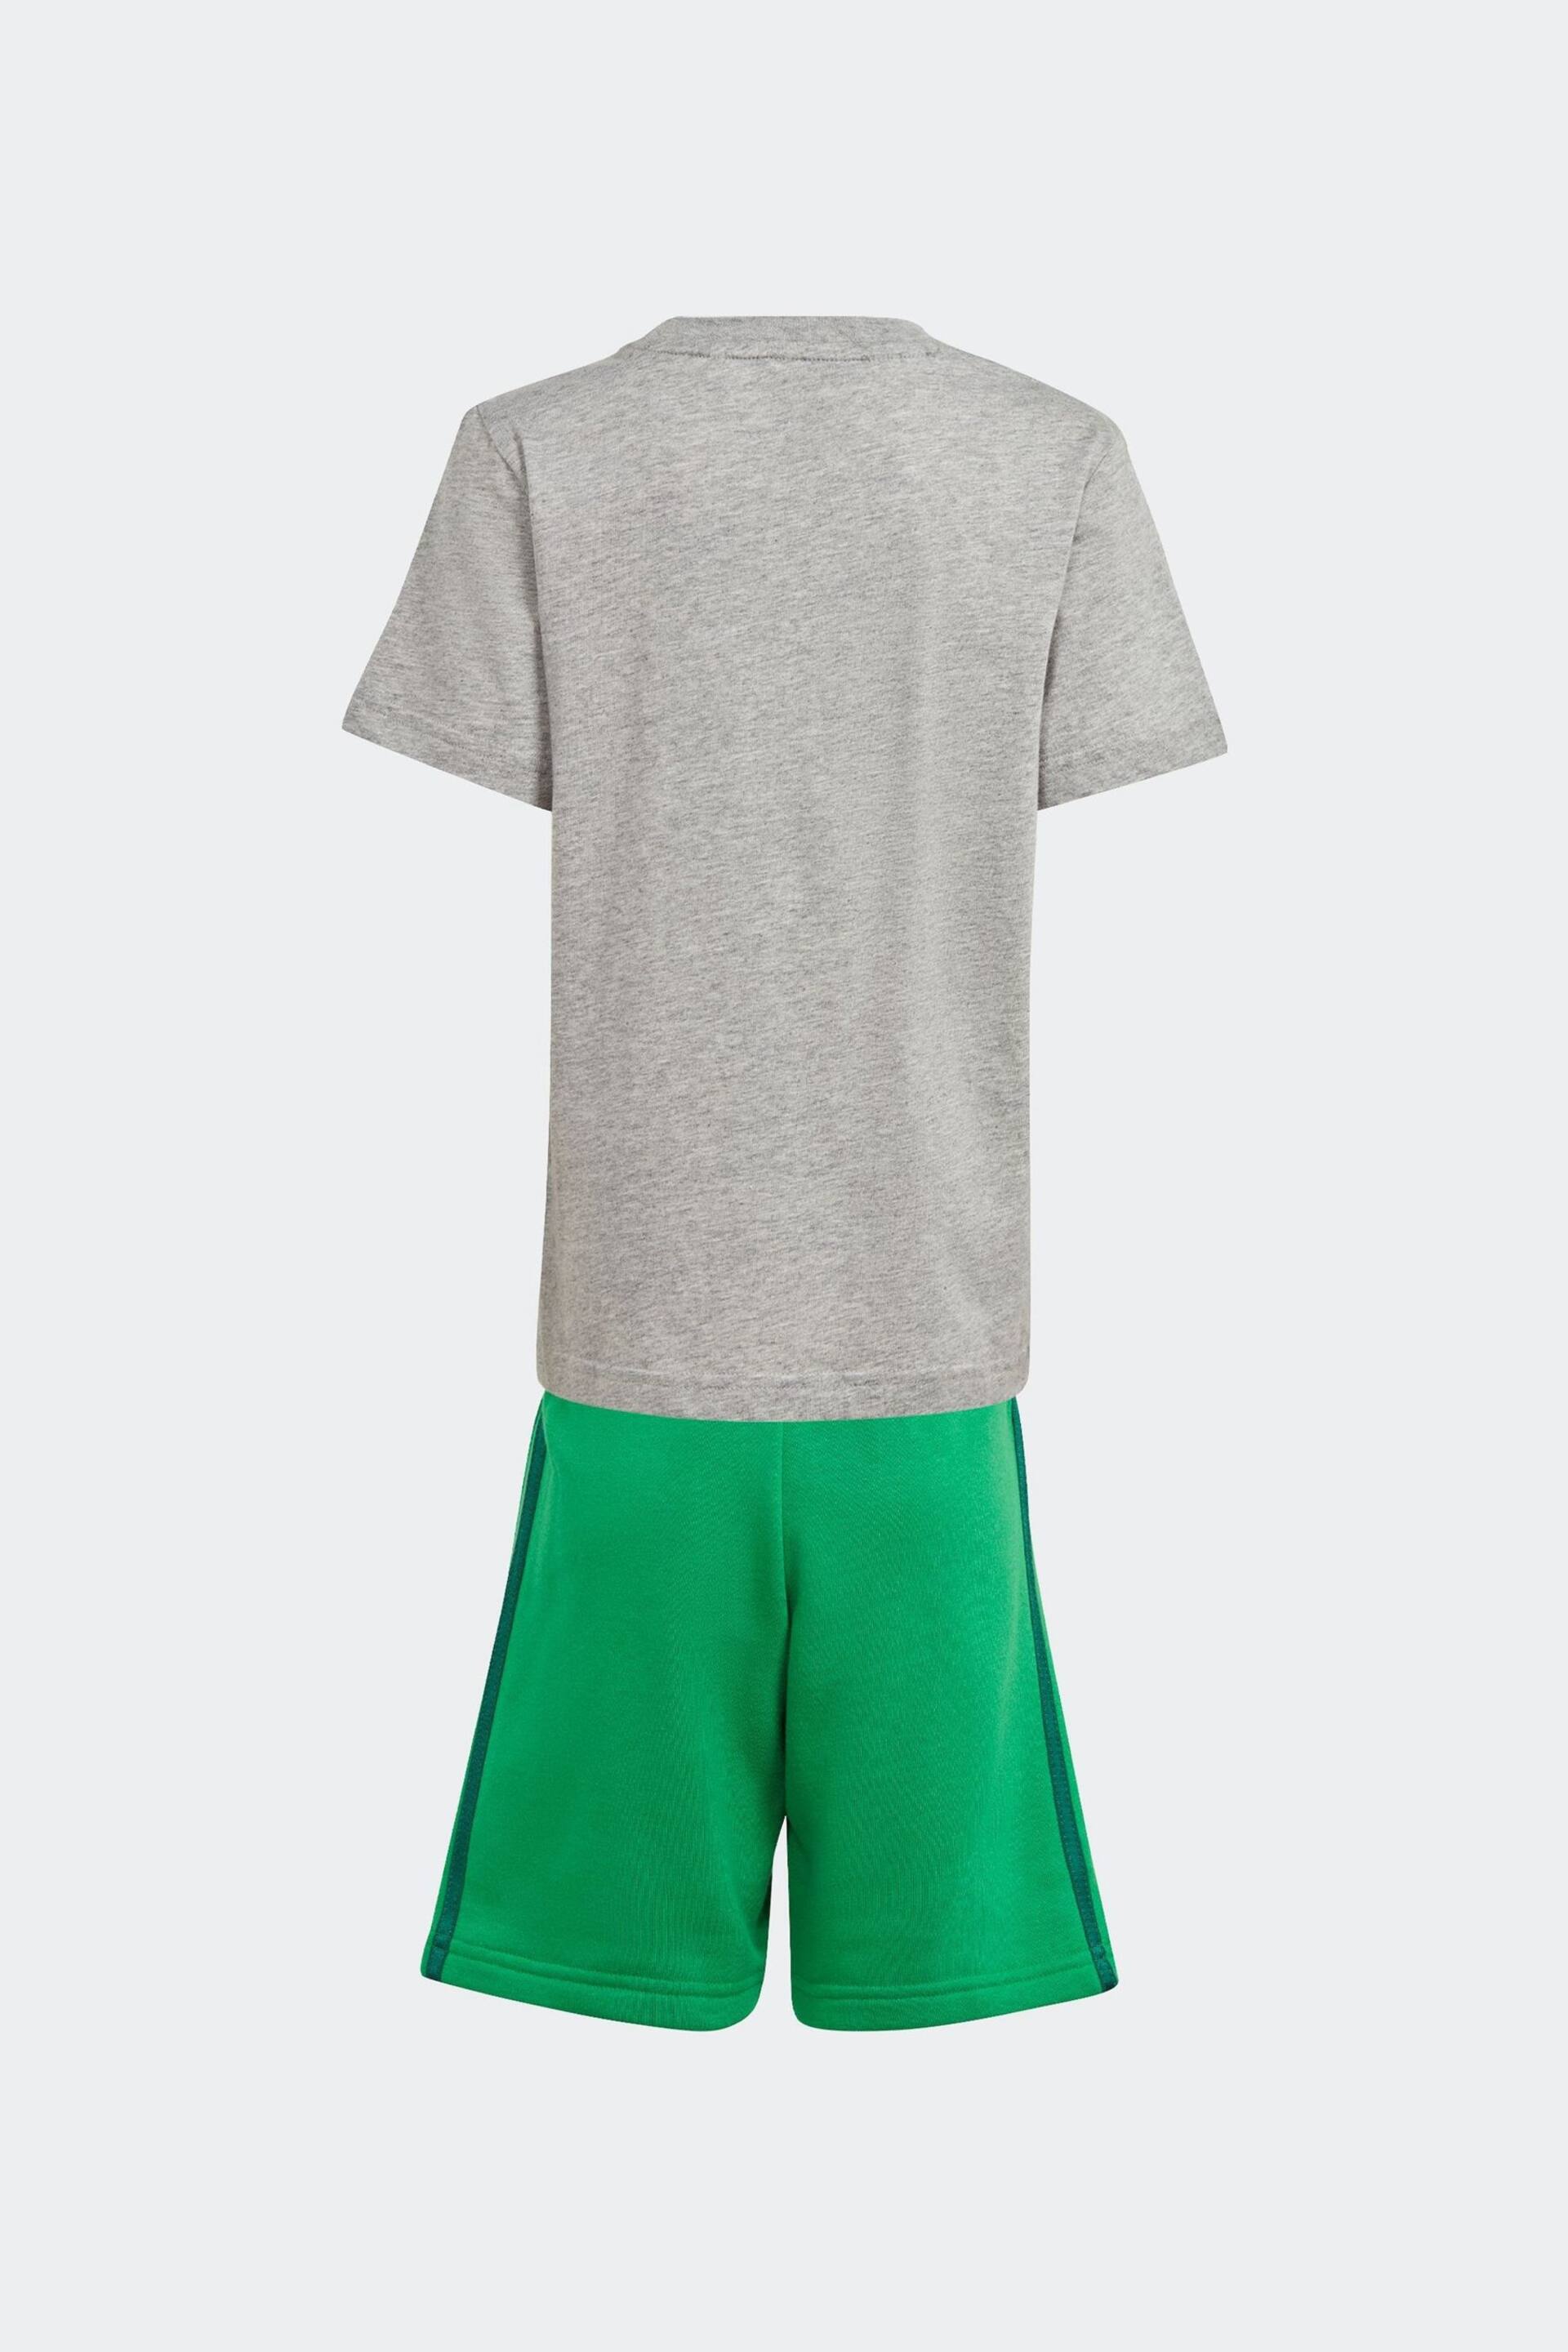 adidas Originals Short T-Shirt Set - Image 2 of 3